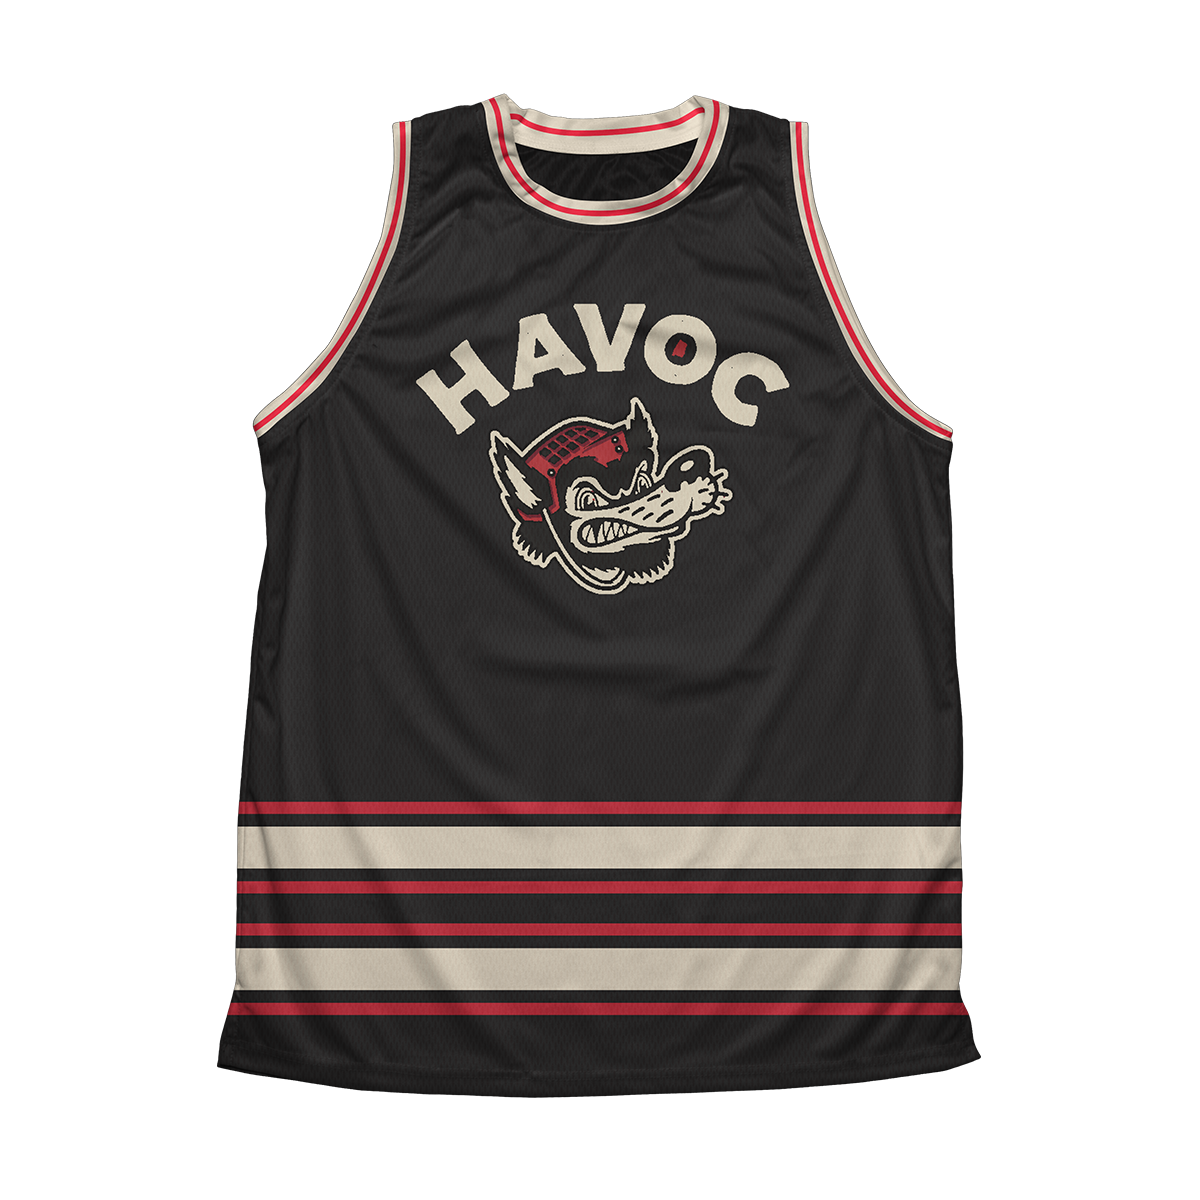 New Balance, Shirts, Vintage Huntsville Havoc Hockey Jersey New Balance  Made In Usa